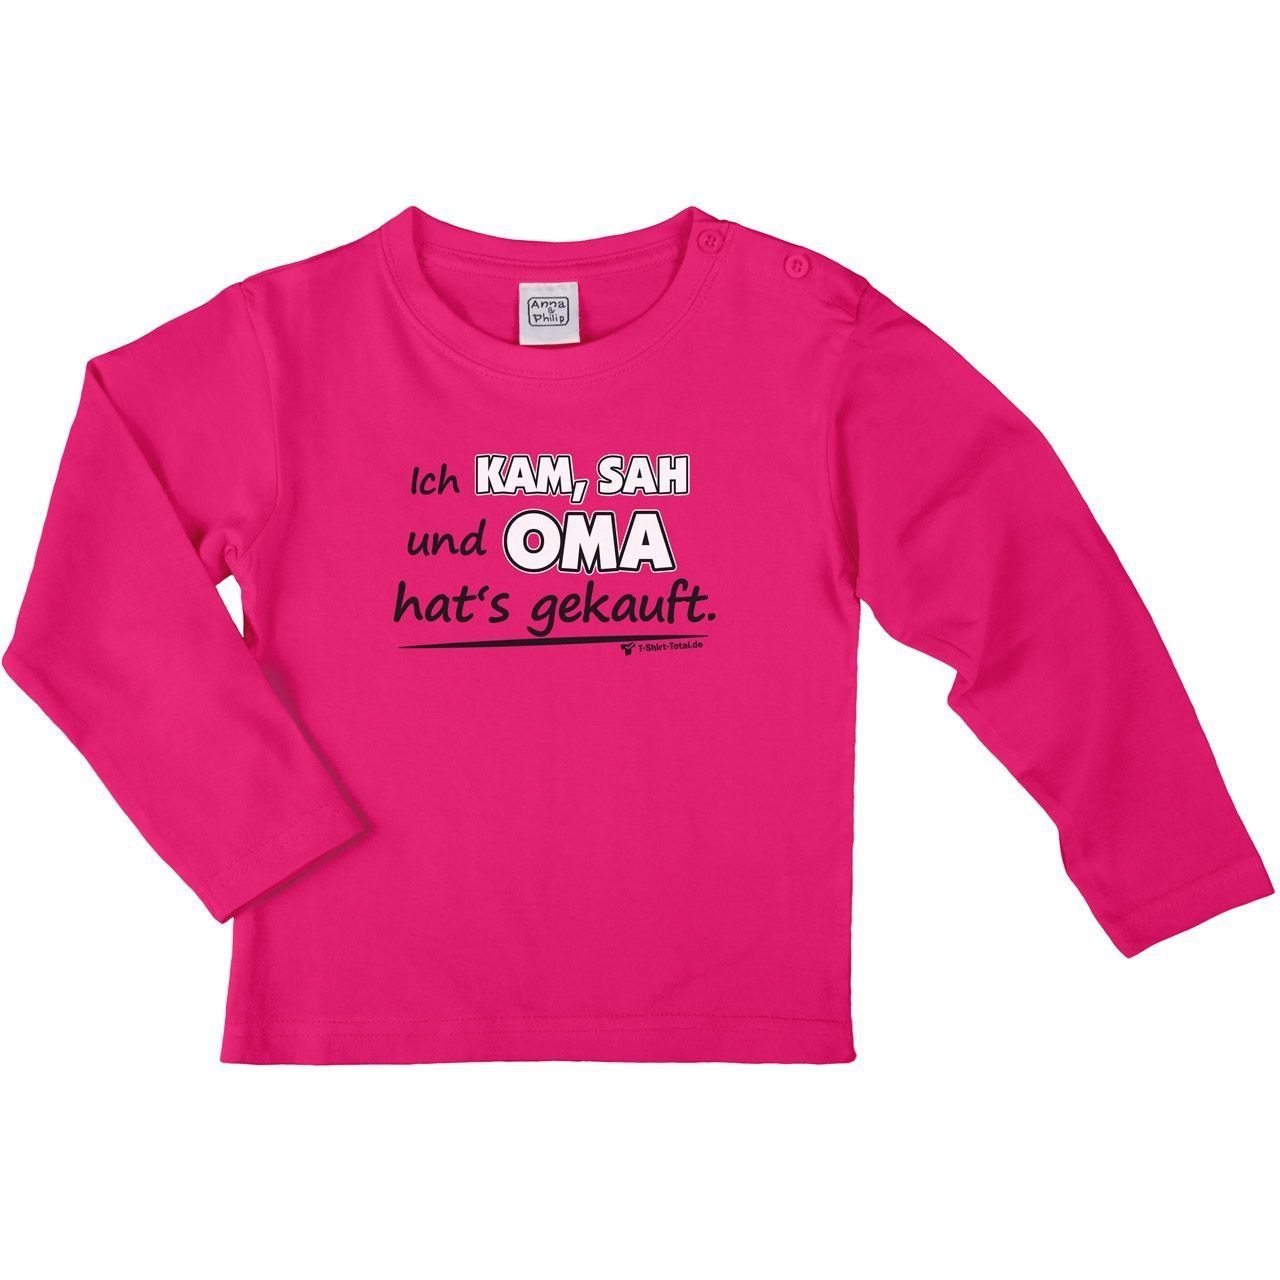 Oma hats gekauft Kinder Langarm Shirt pink 92